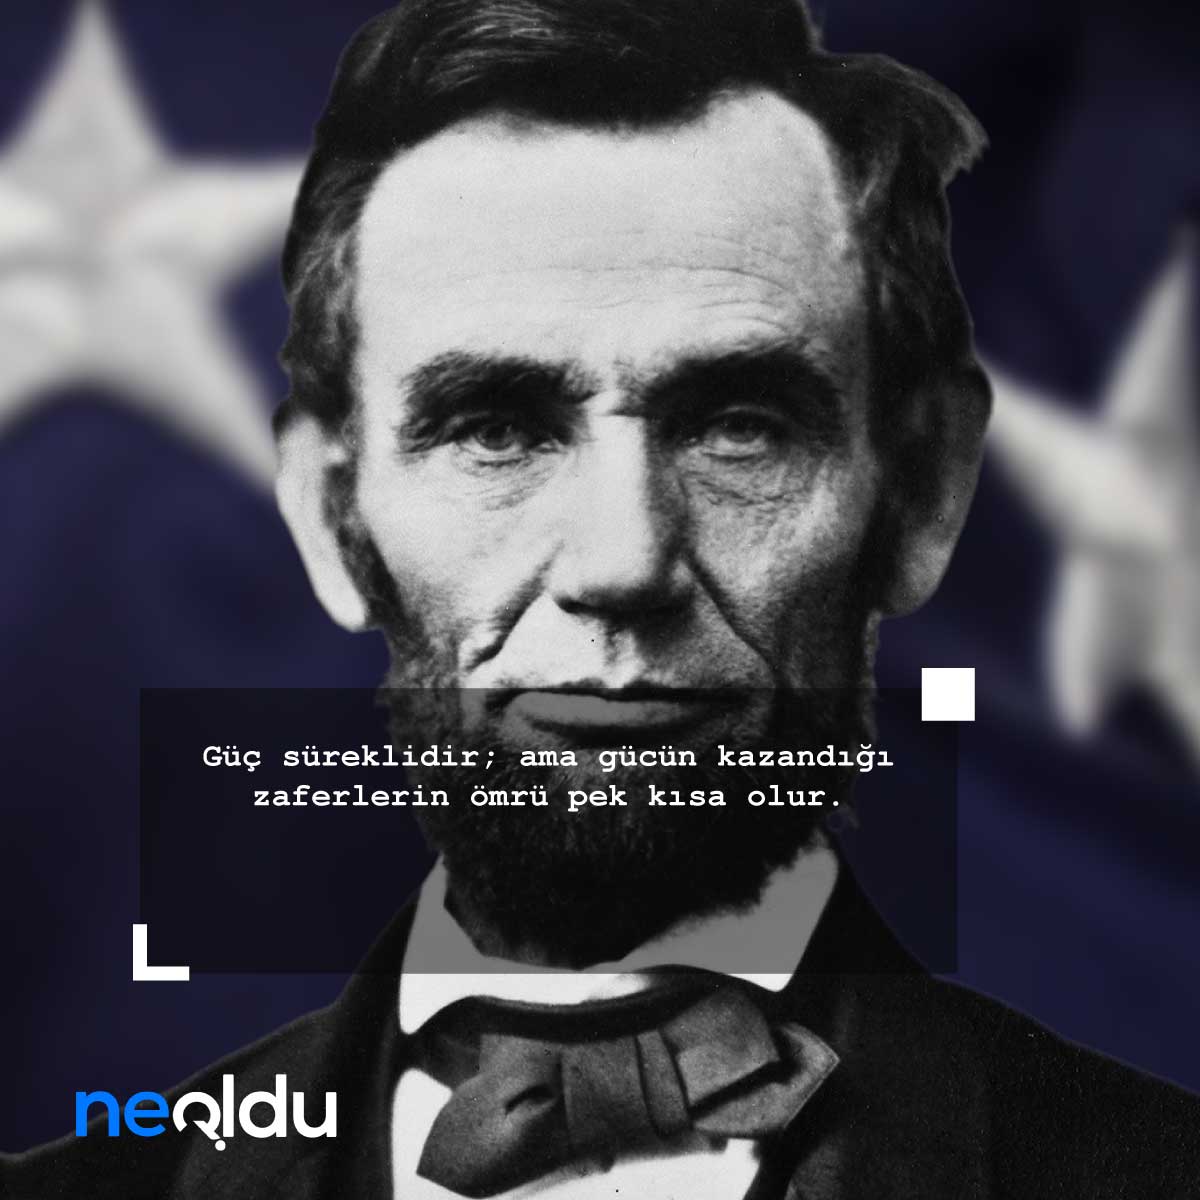 Abraham Lincoln Sözleri